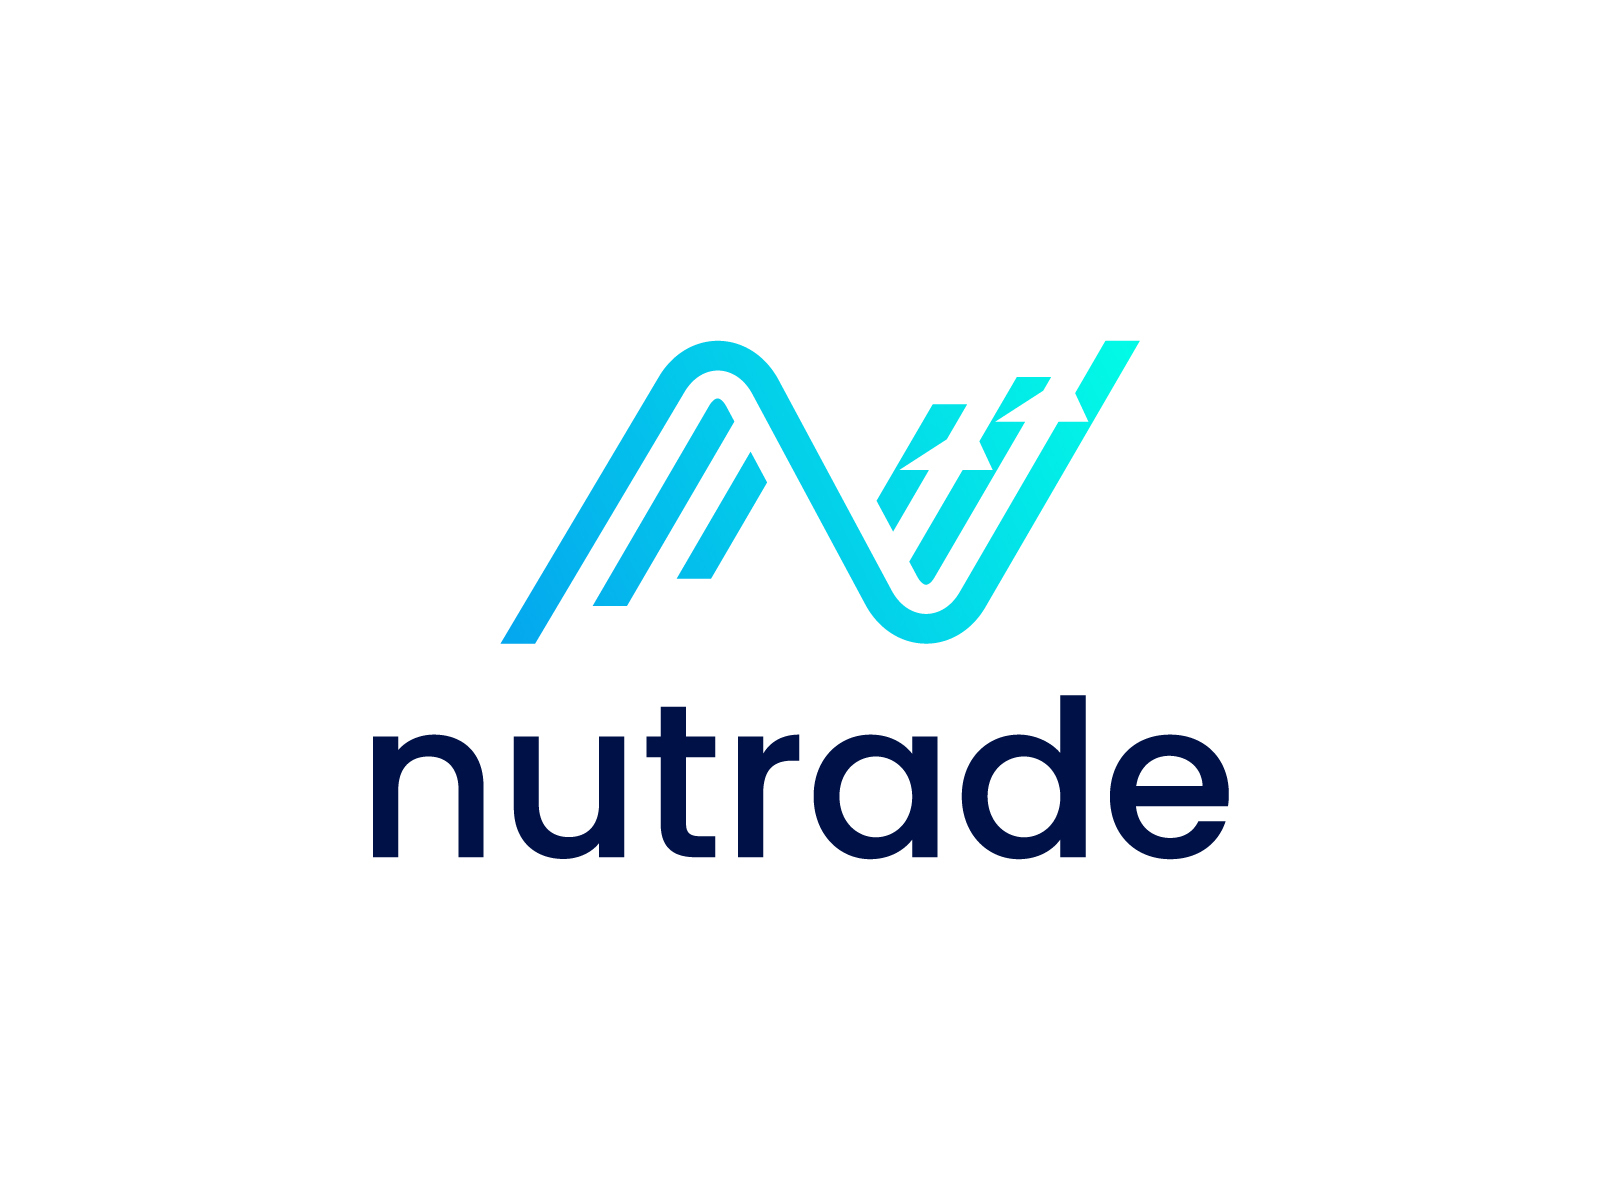 Nutrade letter N logo by Asy Studio on Dribbble